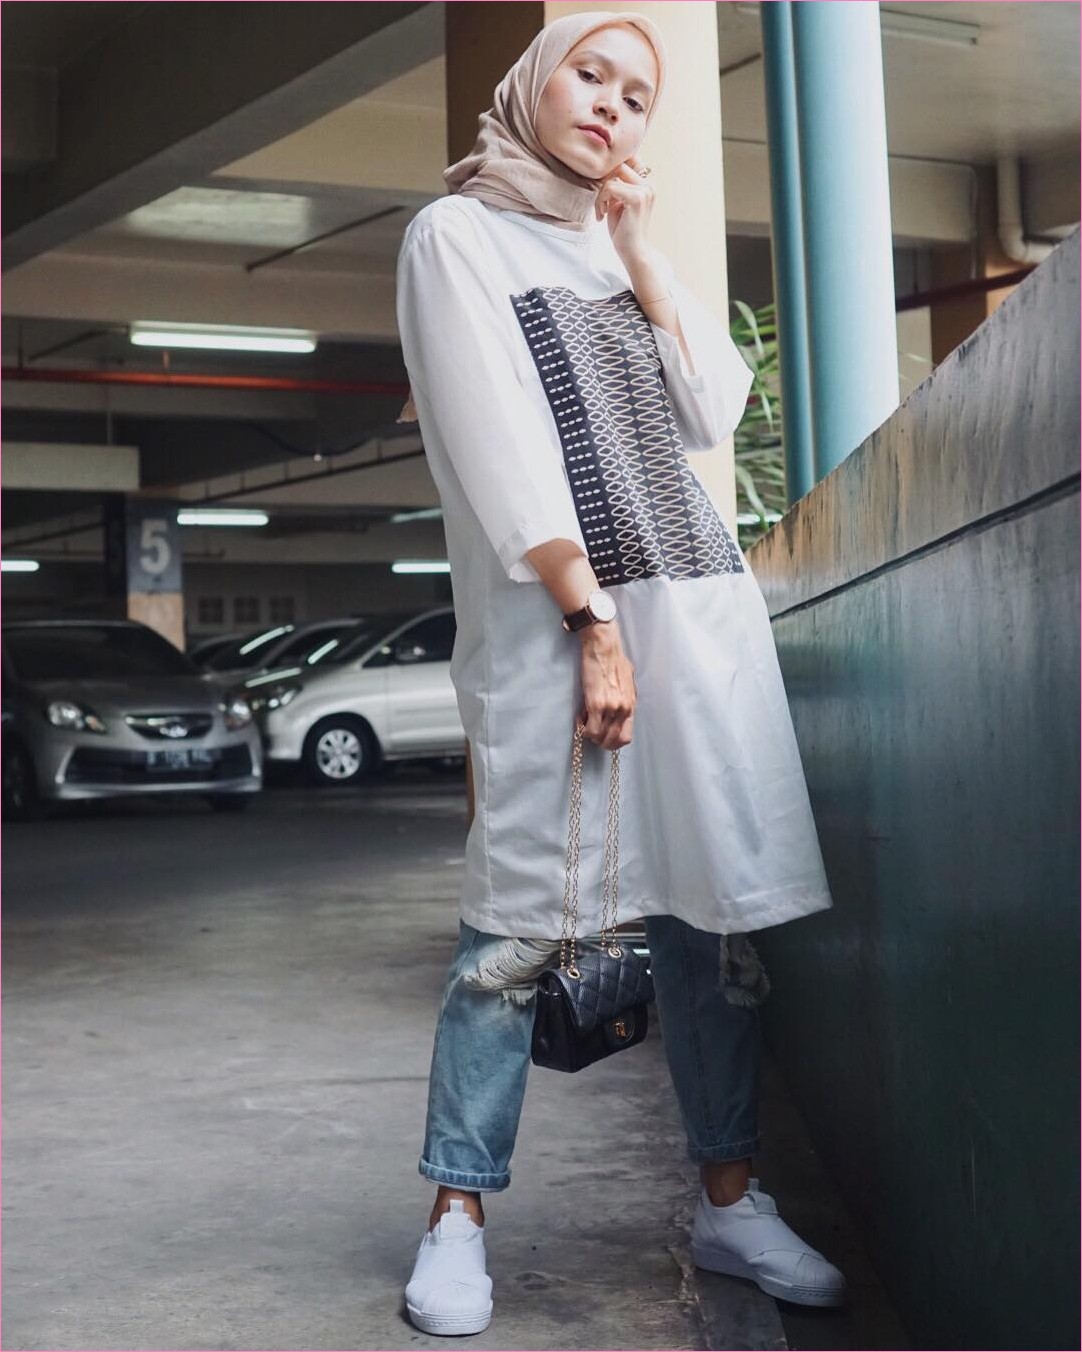  Hijabers Ala Selebgram ini menjadi salah satu busana gaul dan modis yang semakin banyak d 24 Model Outfit Baju Tunic Hijabers Ala Selebgram 2018 Terpopuler